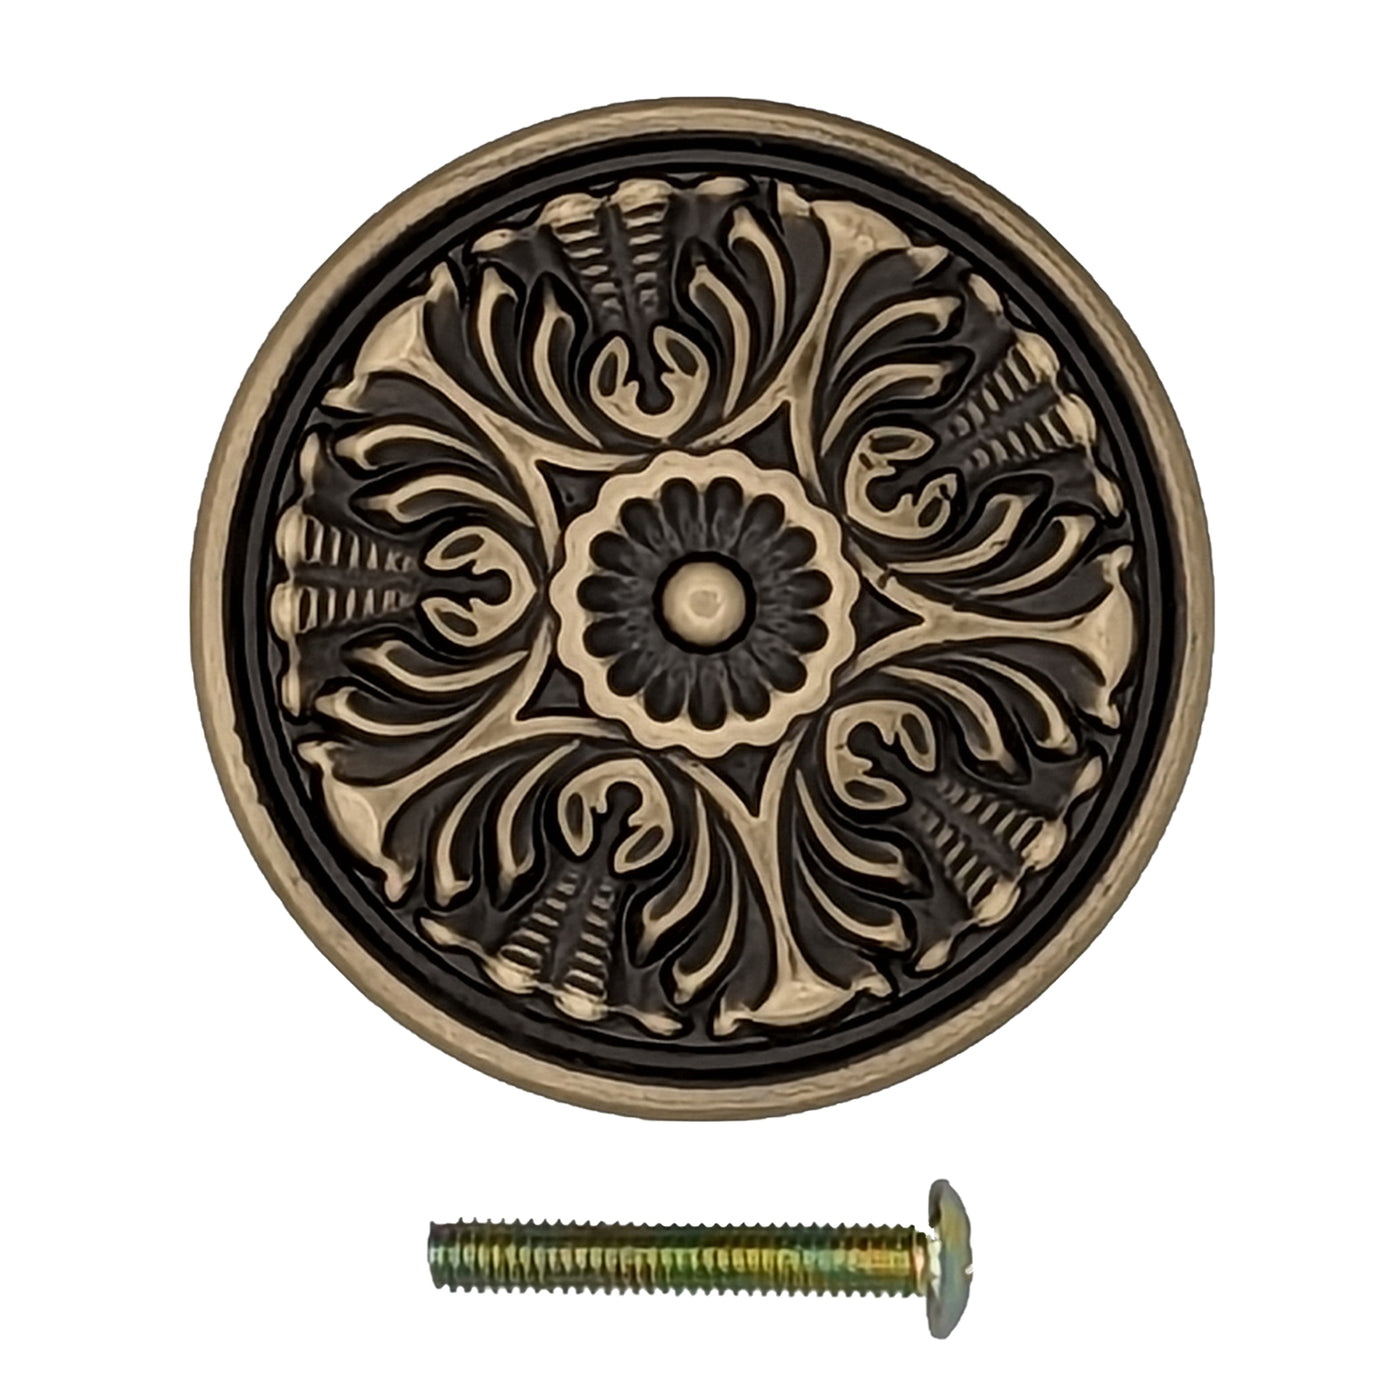 2 Inch Victorian Star Filigree Doorknob (Antique Brass Finish)